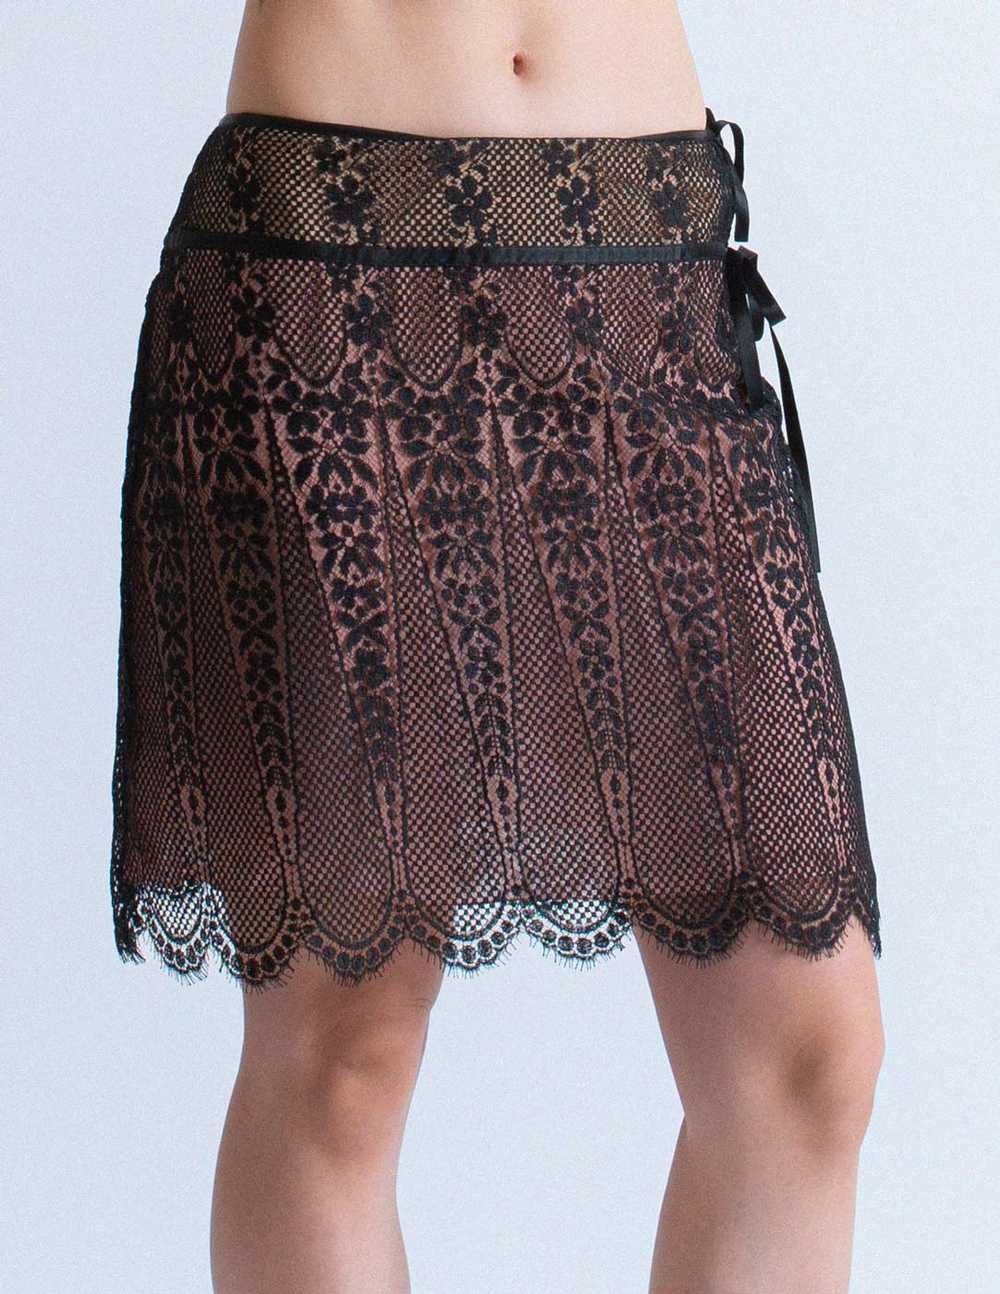 Blumarine lace skirt with ties - image 6